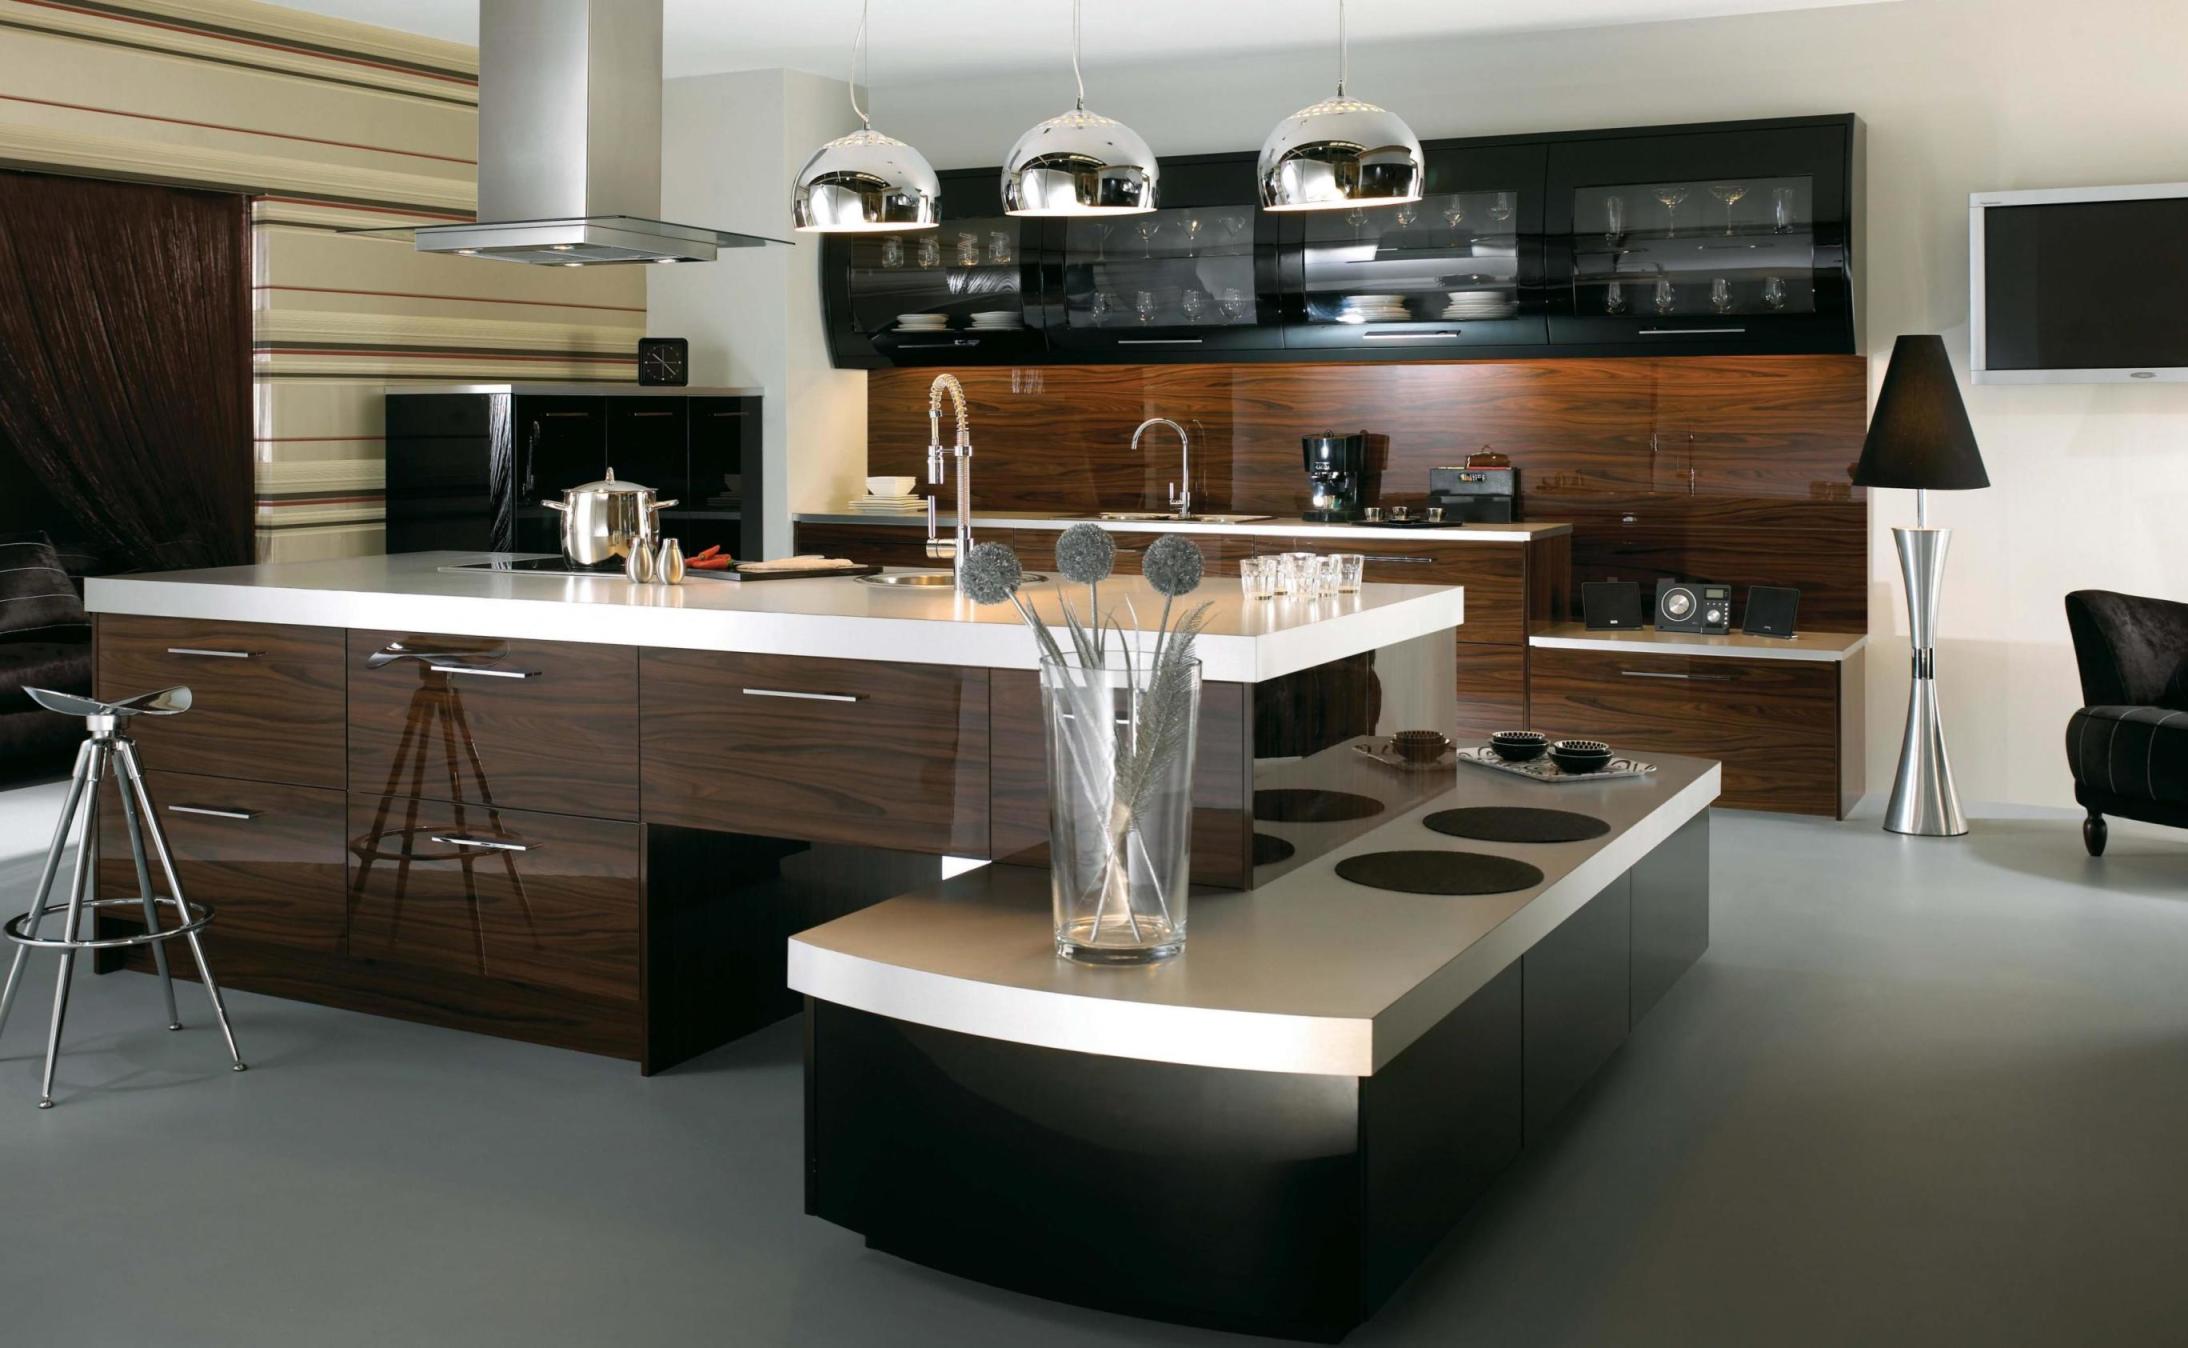  kitchen design uk luxury